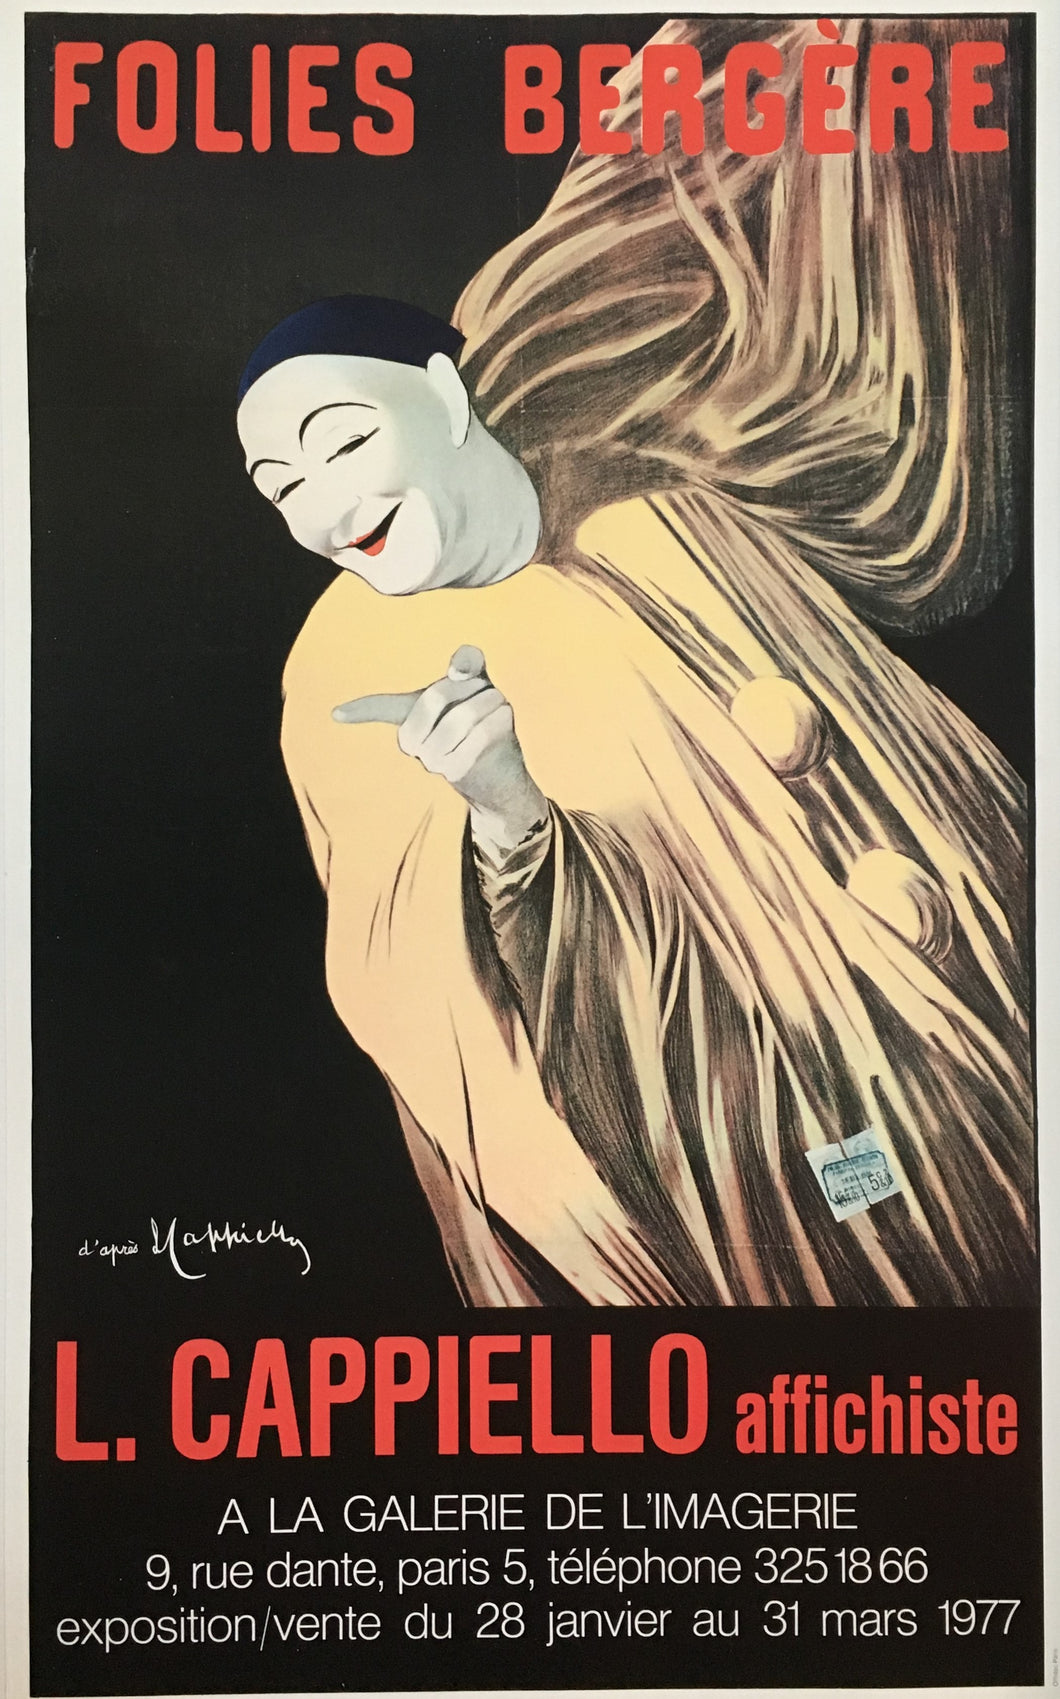 Folies Bergere, L. Cappiello Original Exhibition Poster